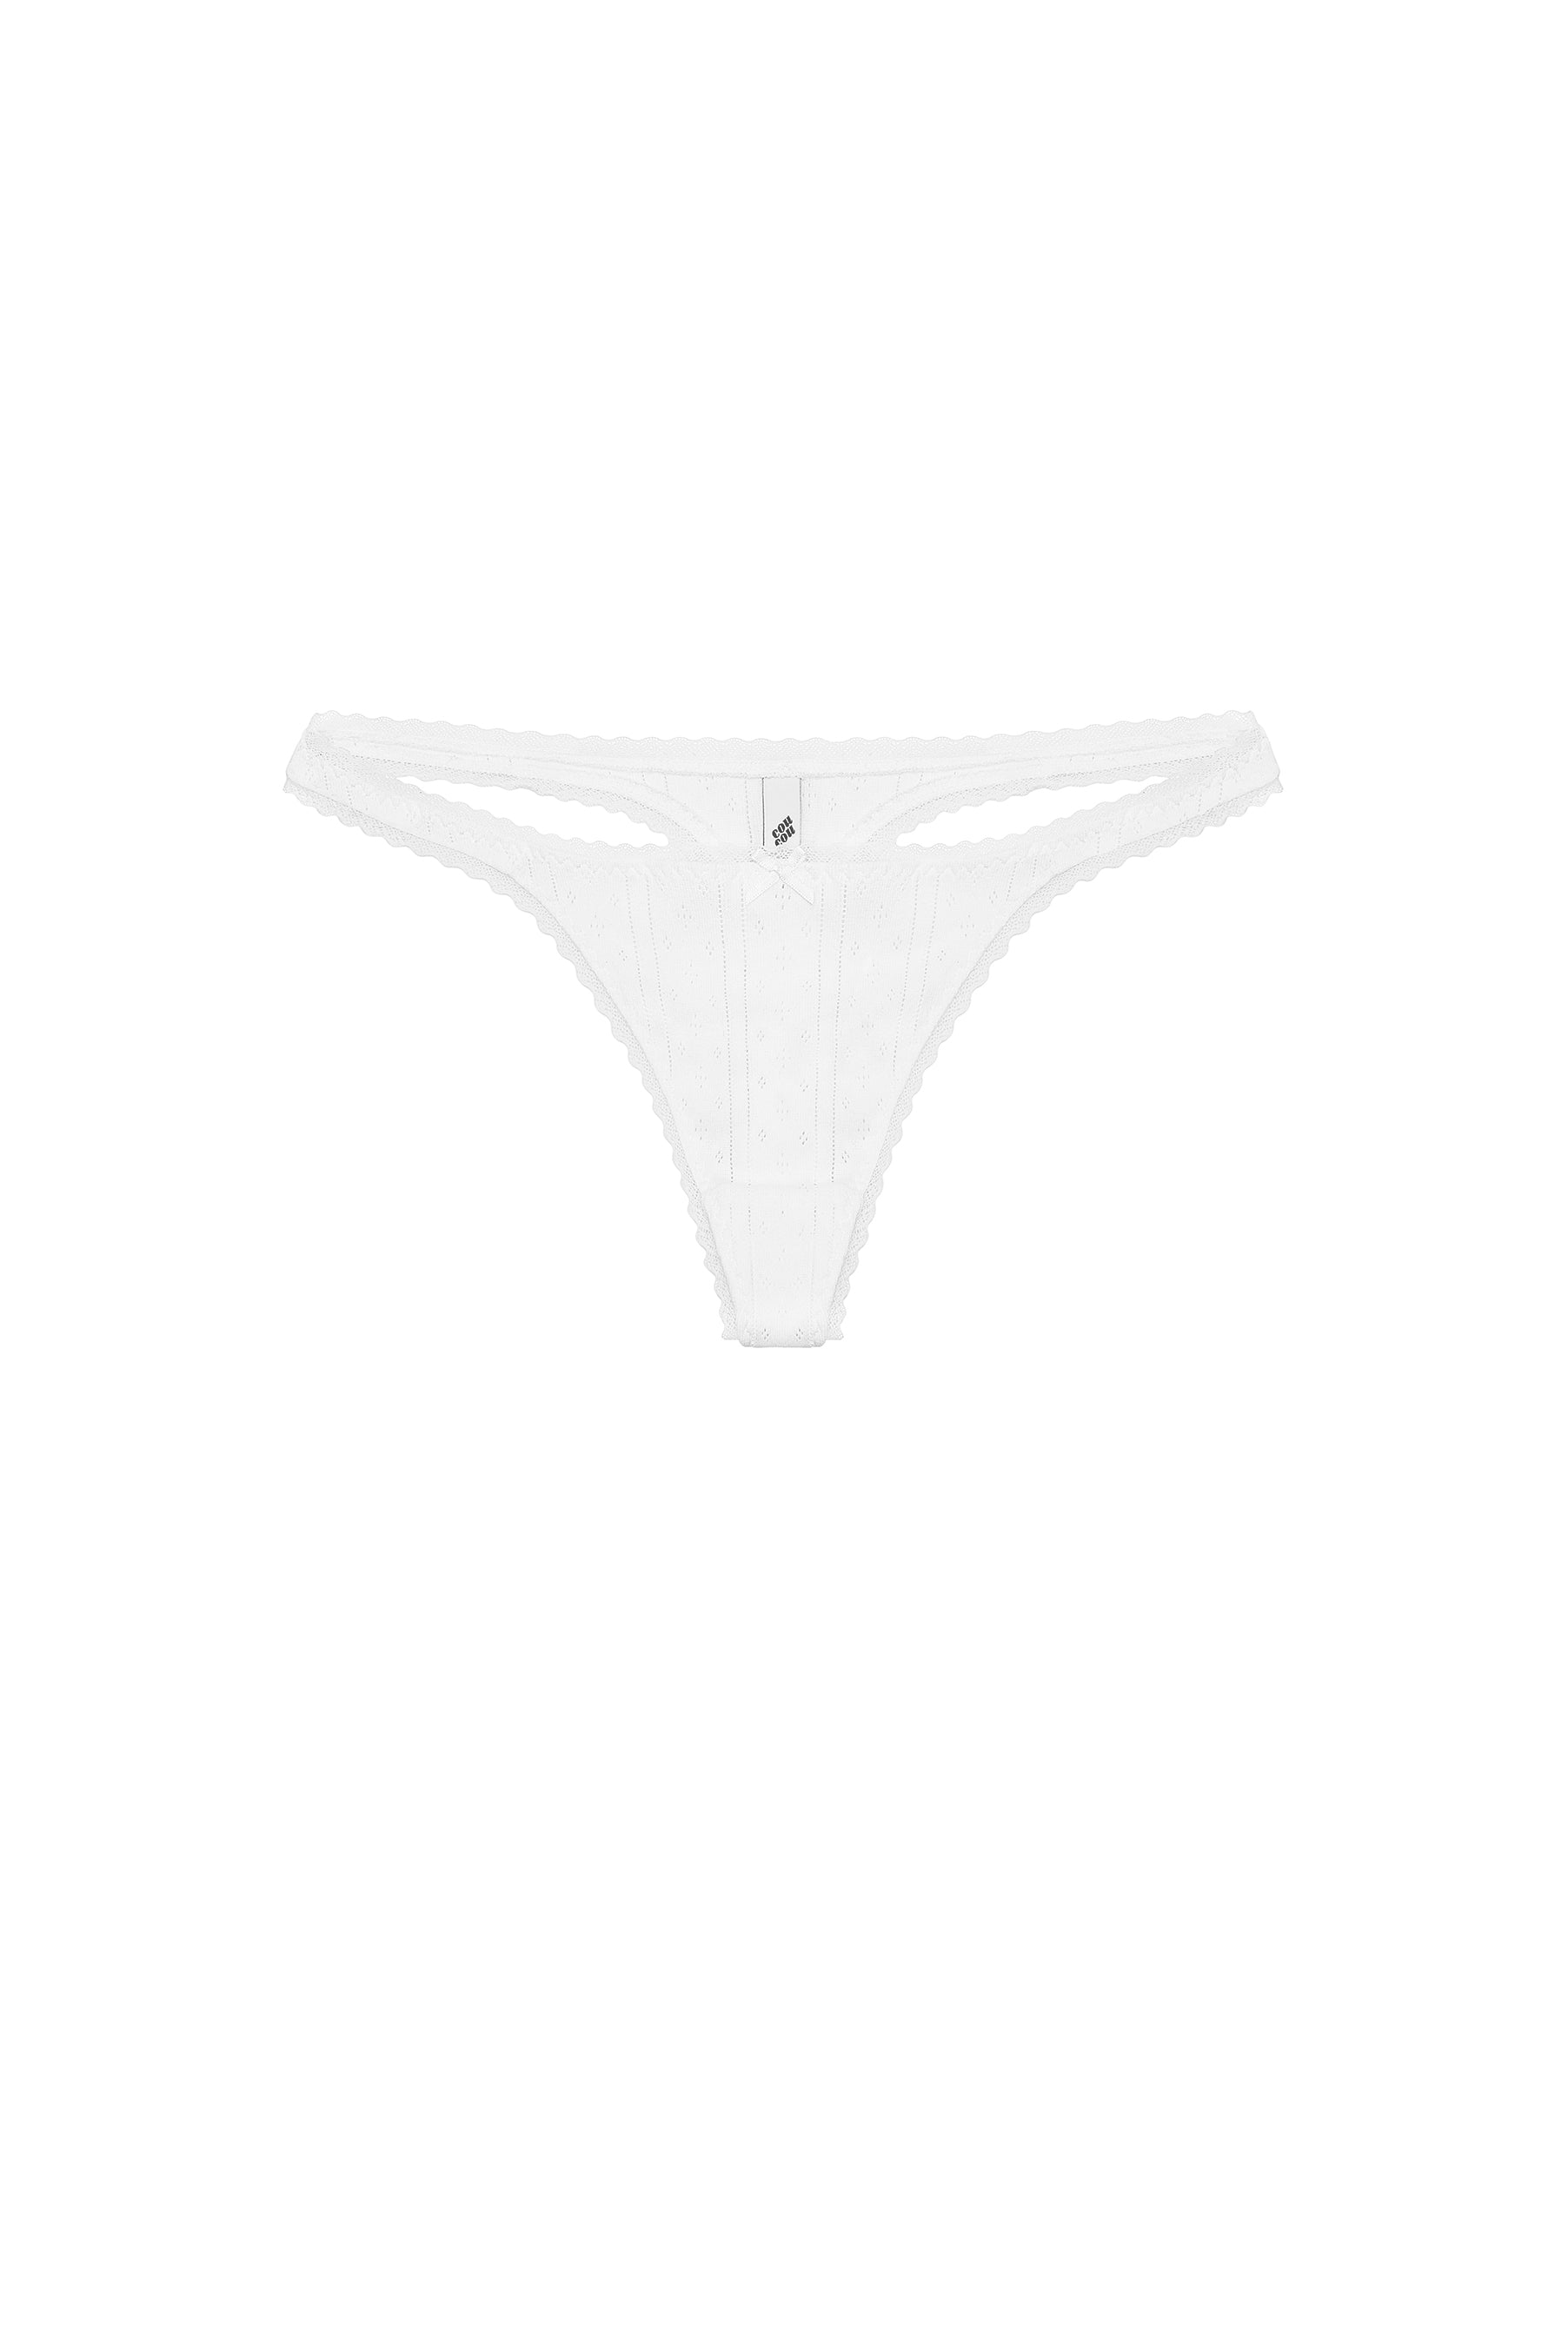 SIMIYA Womens Cotton Underwear Comfort Breathable Bikini Panties,Pack of 7